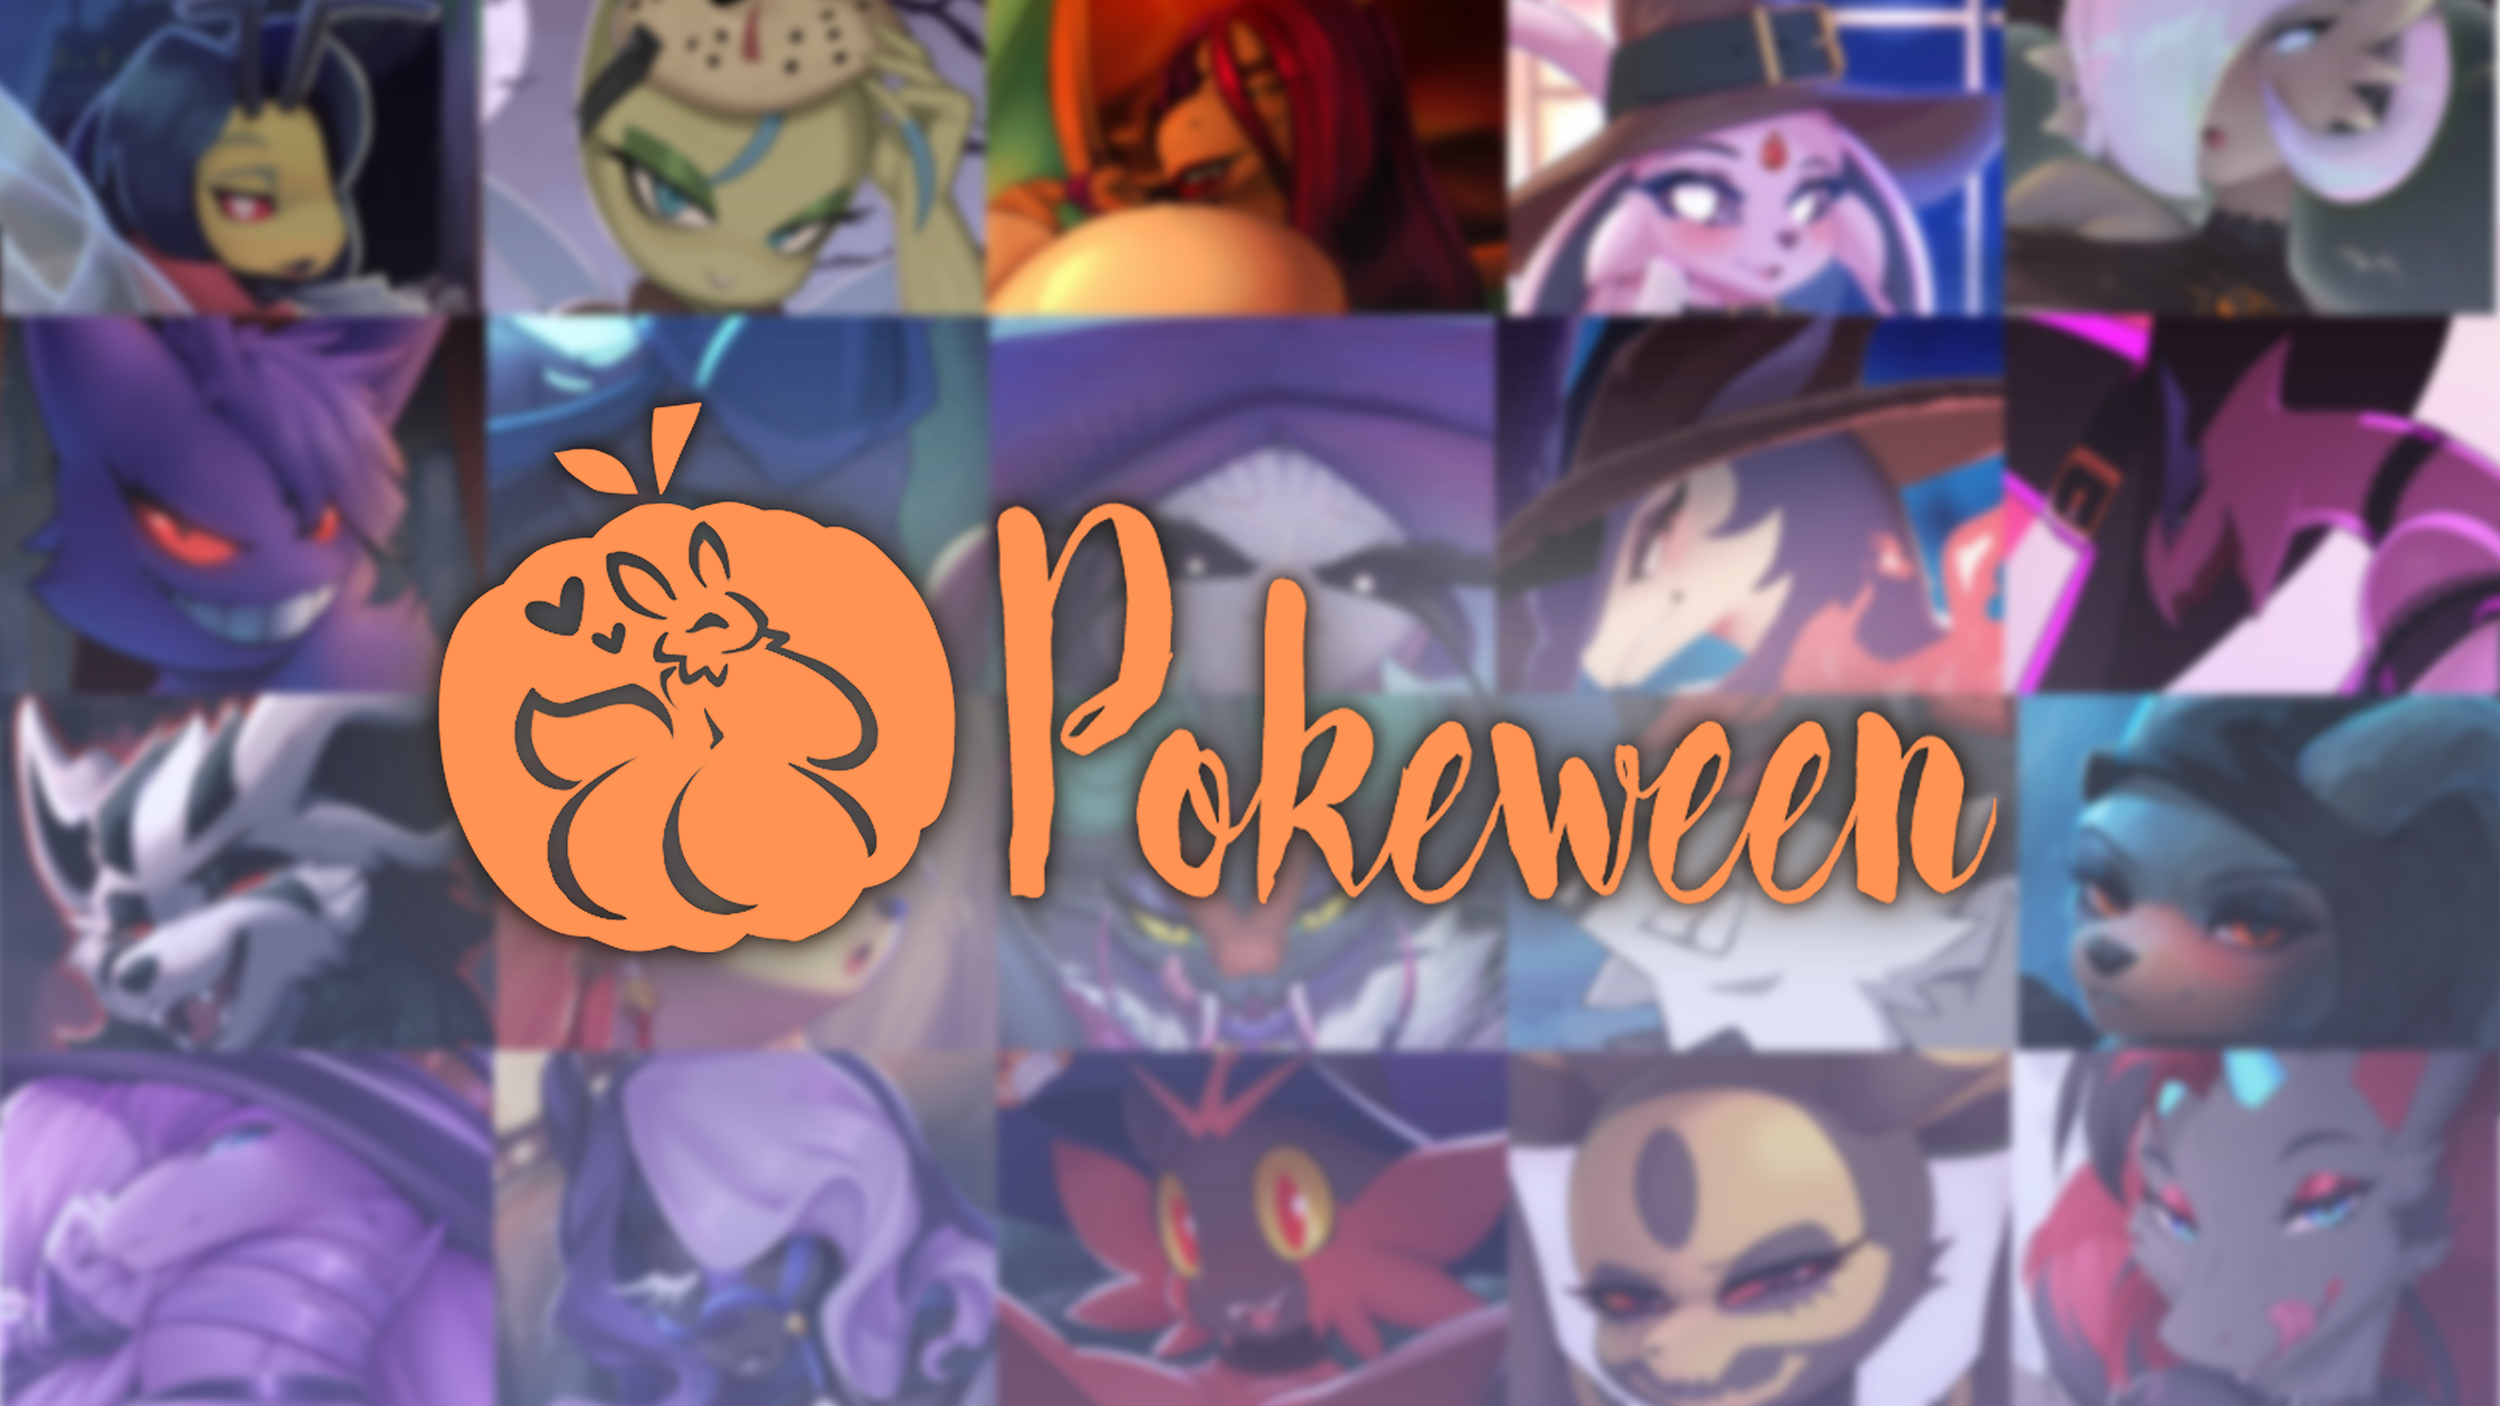 PokeWeen Art Pack